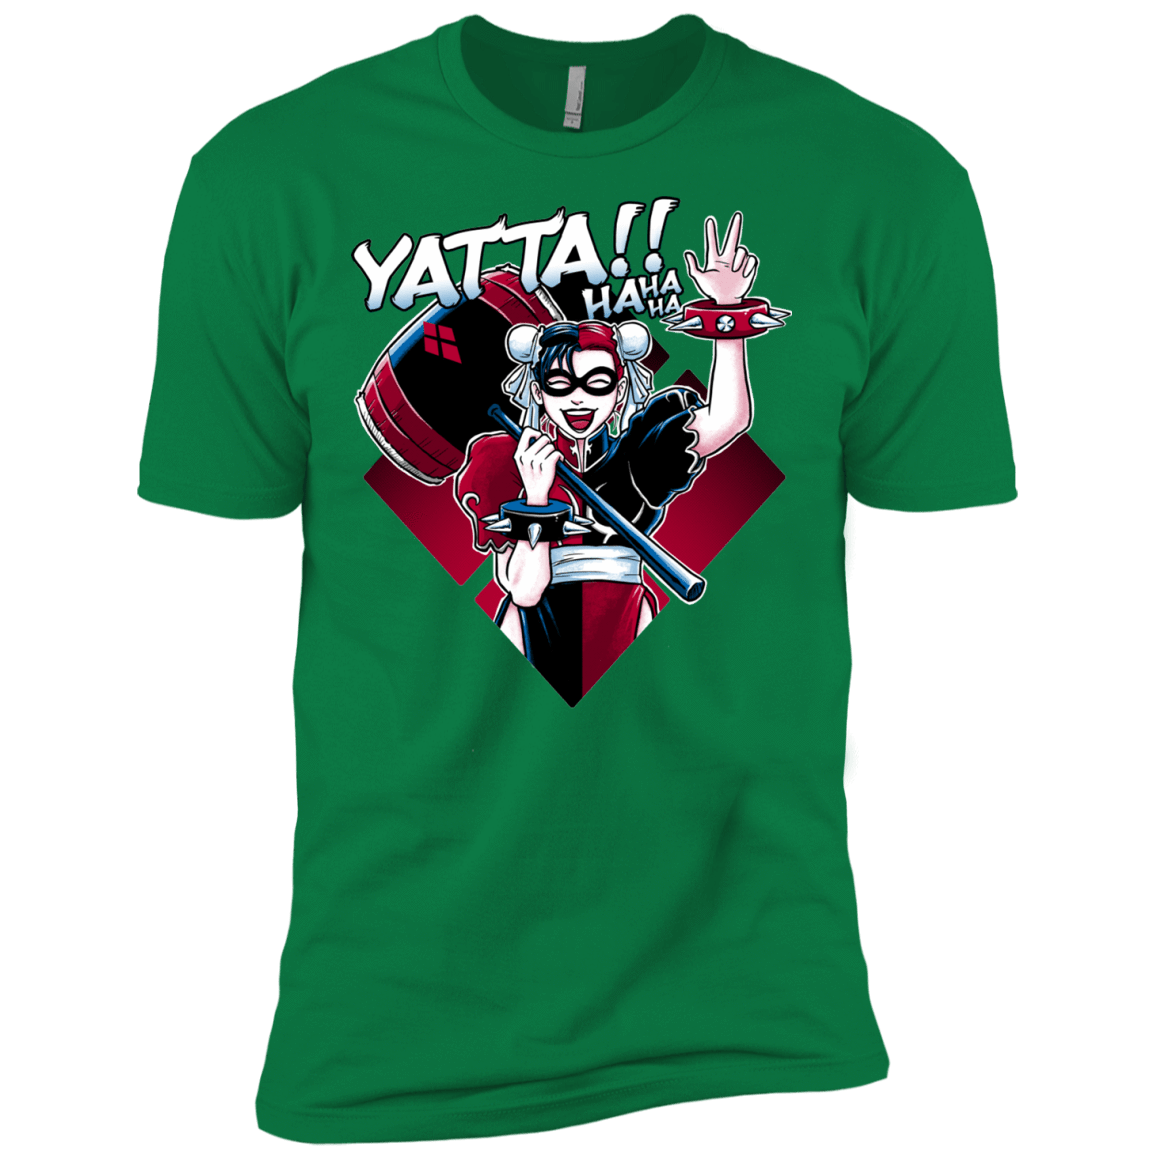 T-Shirts Kelly Green / X-Small Harley Yatta Men's Premium T-Shirt